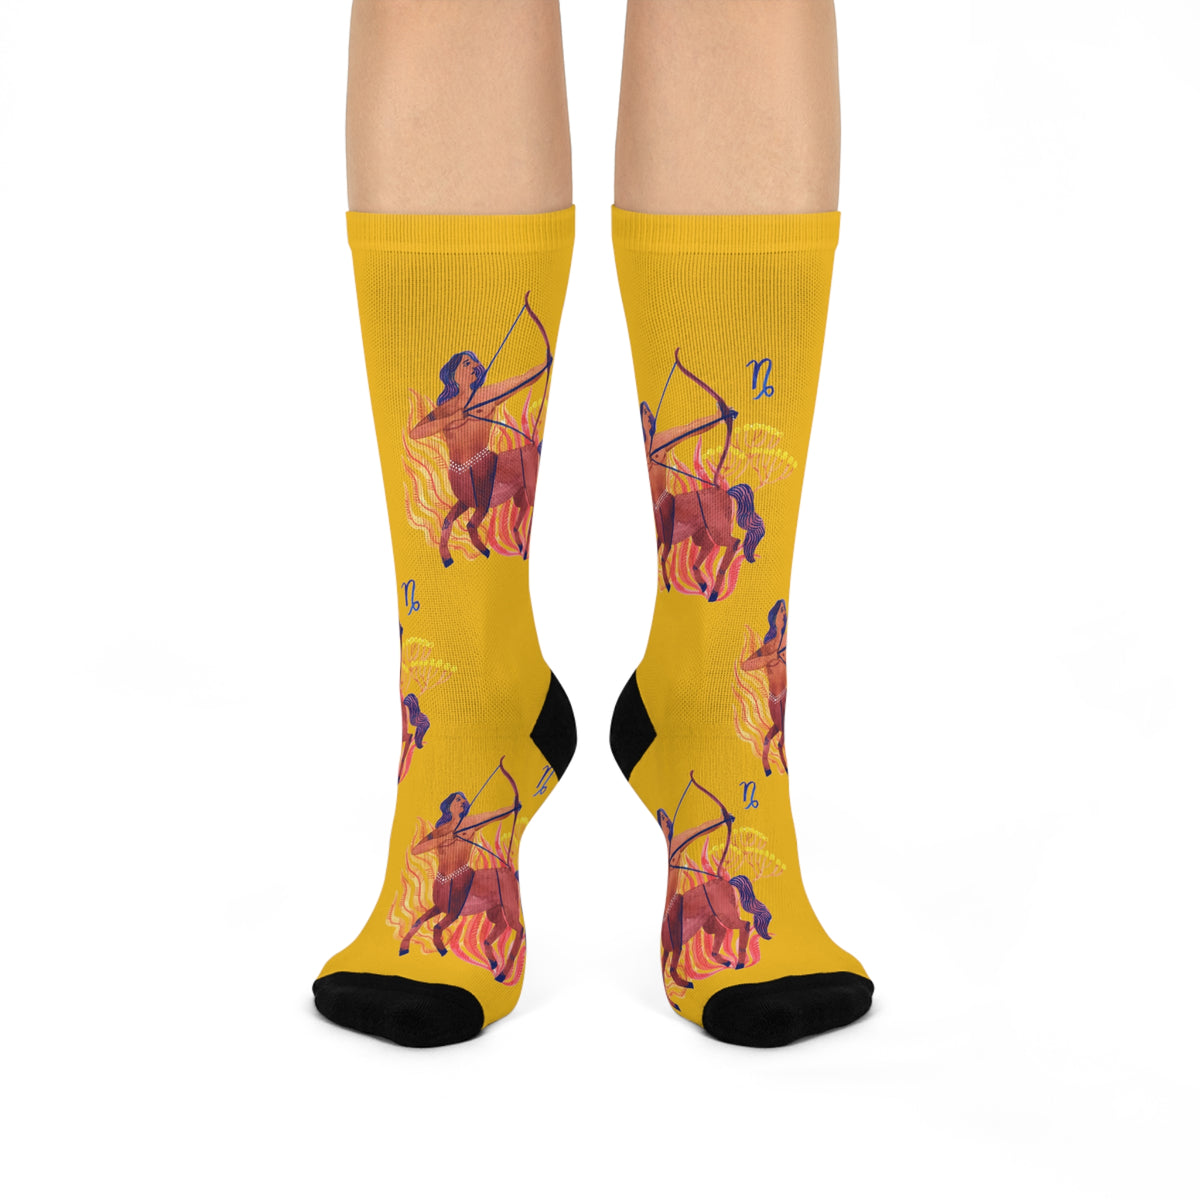 Sagittarius: "Archer Socks"